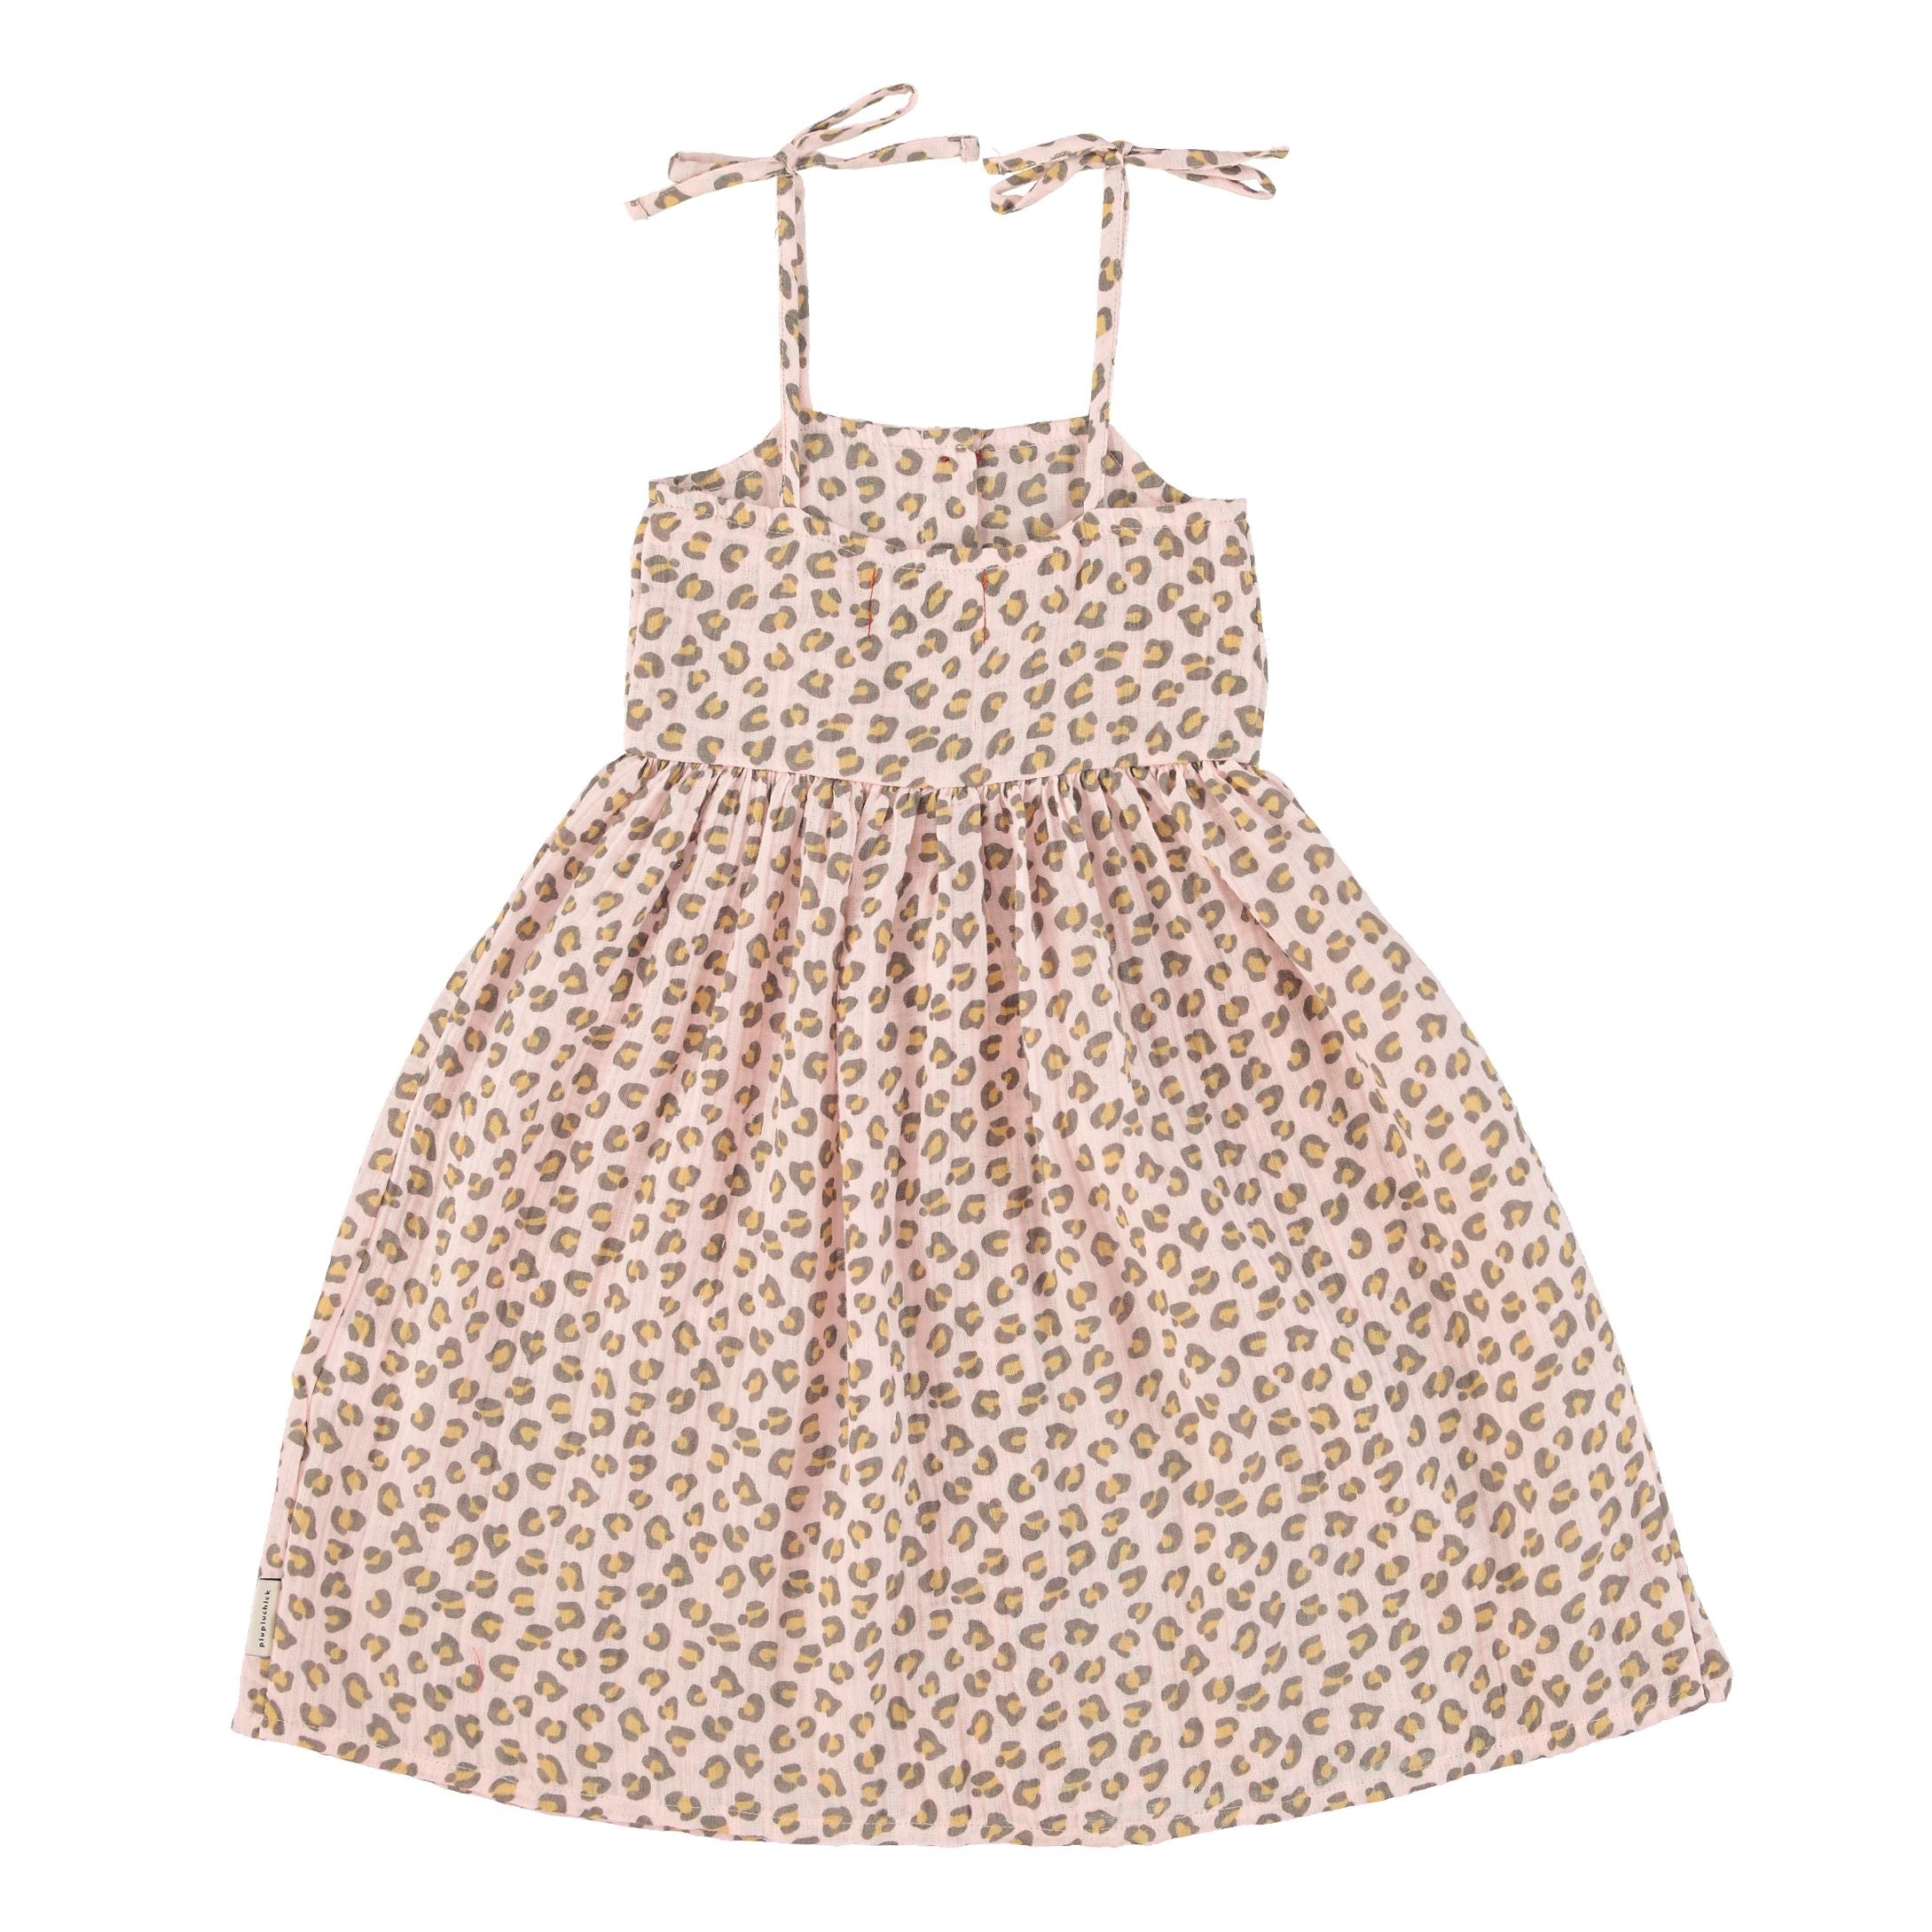 Leopard Dress - Pale pink